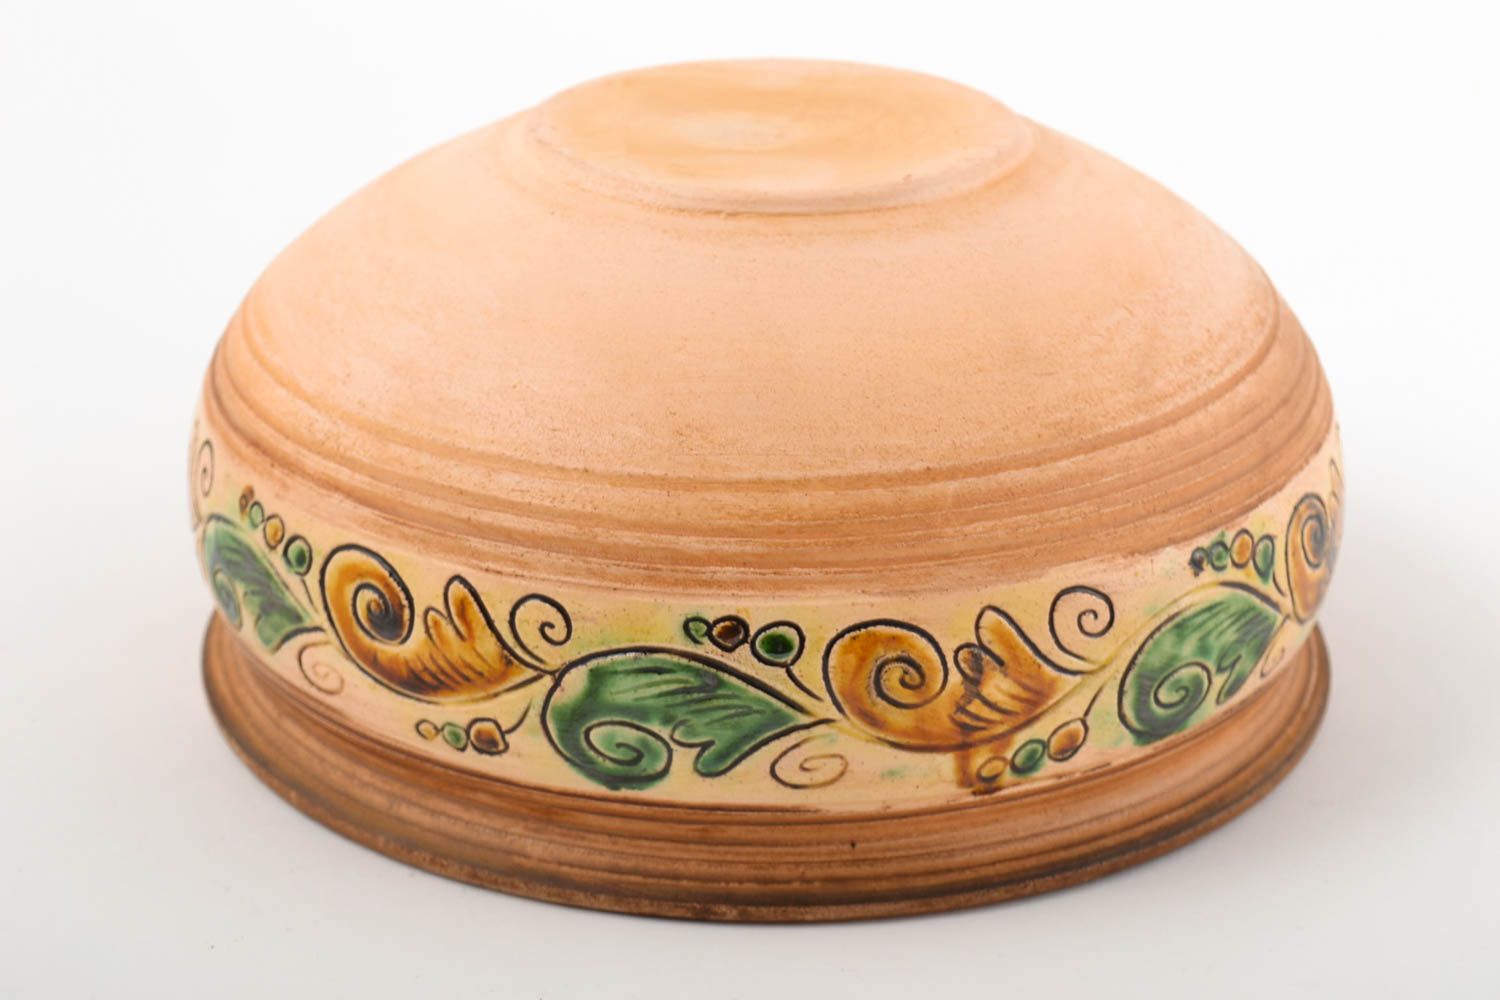 Handmade bowl ceramic dishes unusual bowl for kitchen decor kitchen utensils photo 3